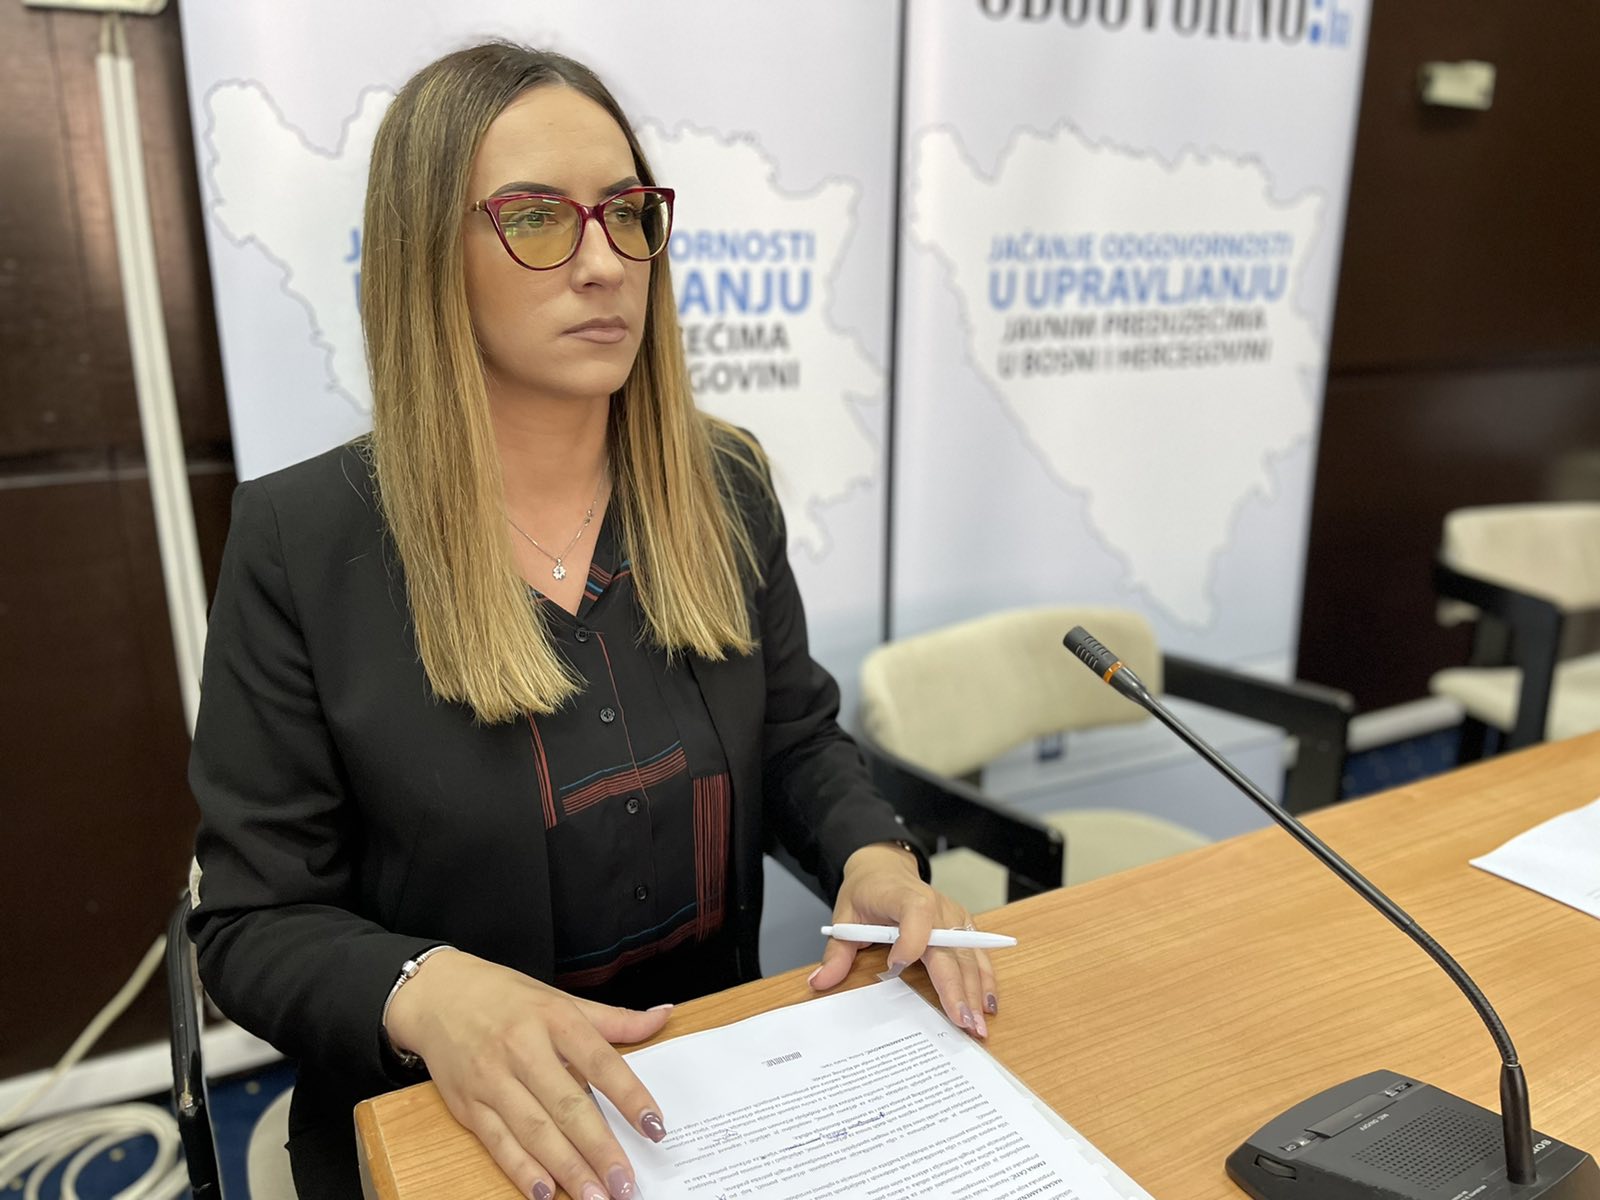 Emina Ćatić, projekt koordinatorica CCI-ja